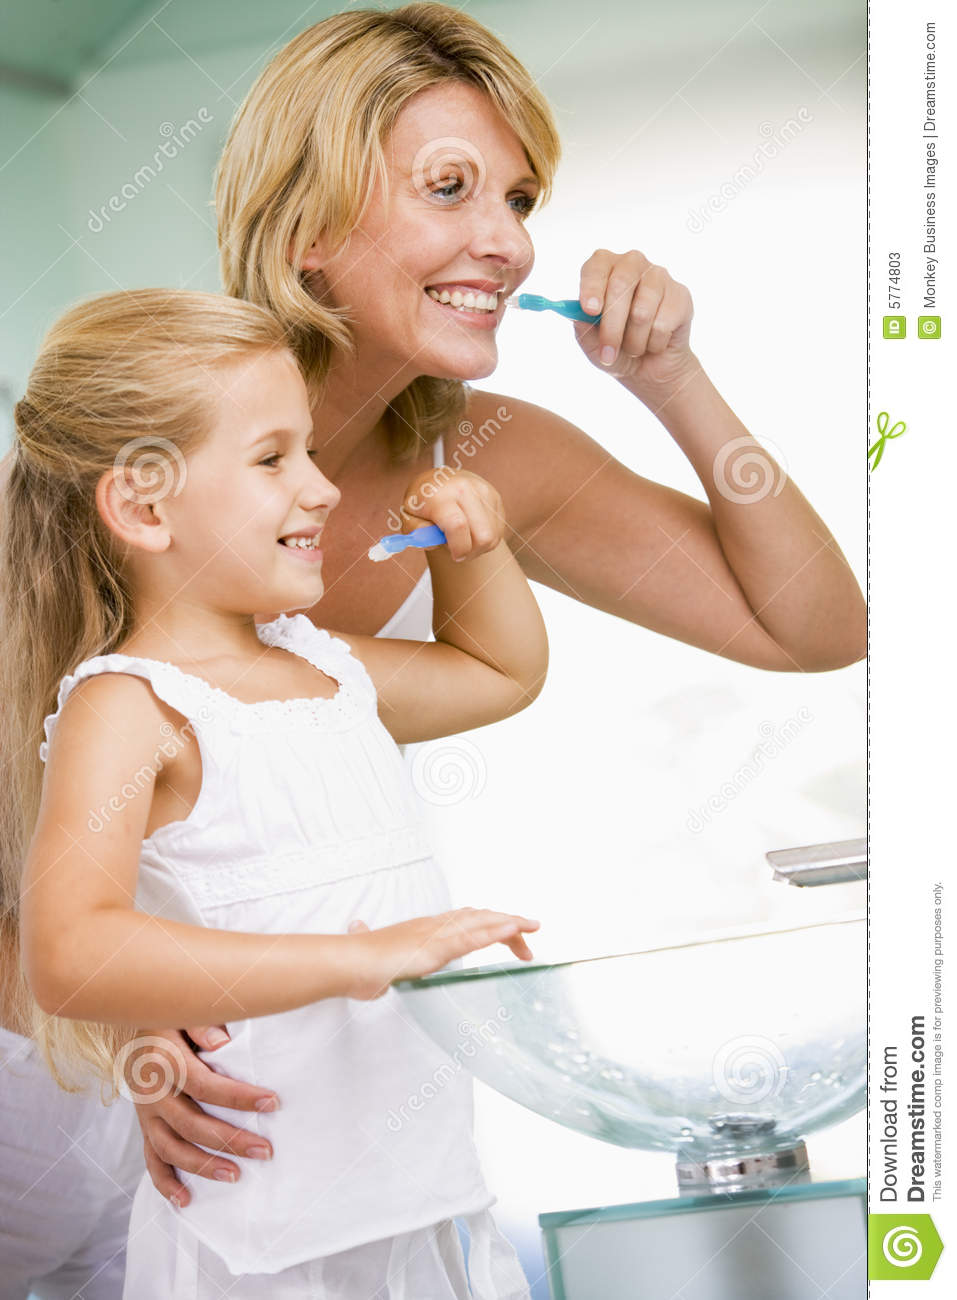 Young Girl In Bathroom Brushing Teeth Stock Photos   Image  5774803